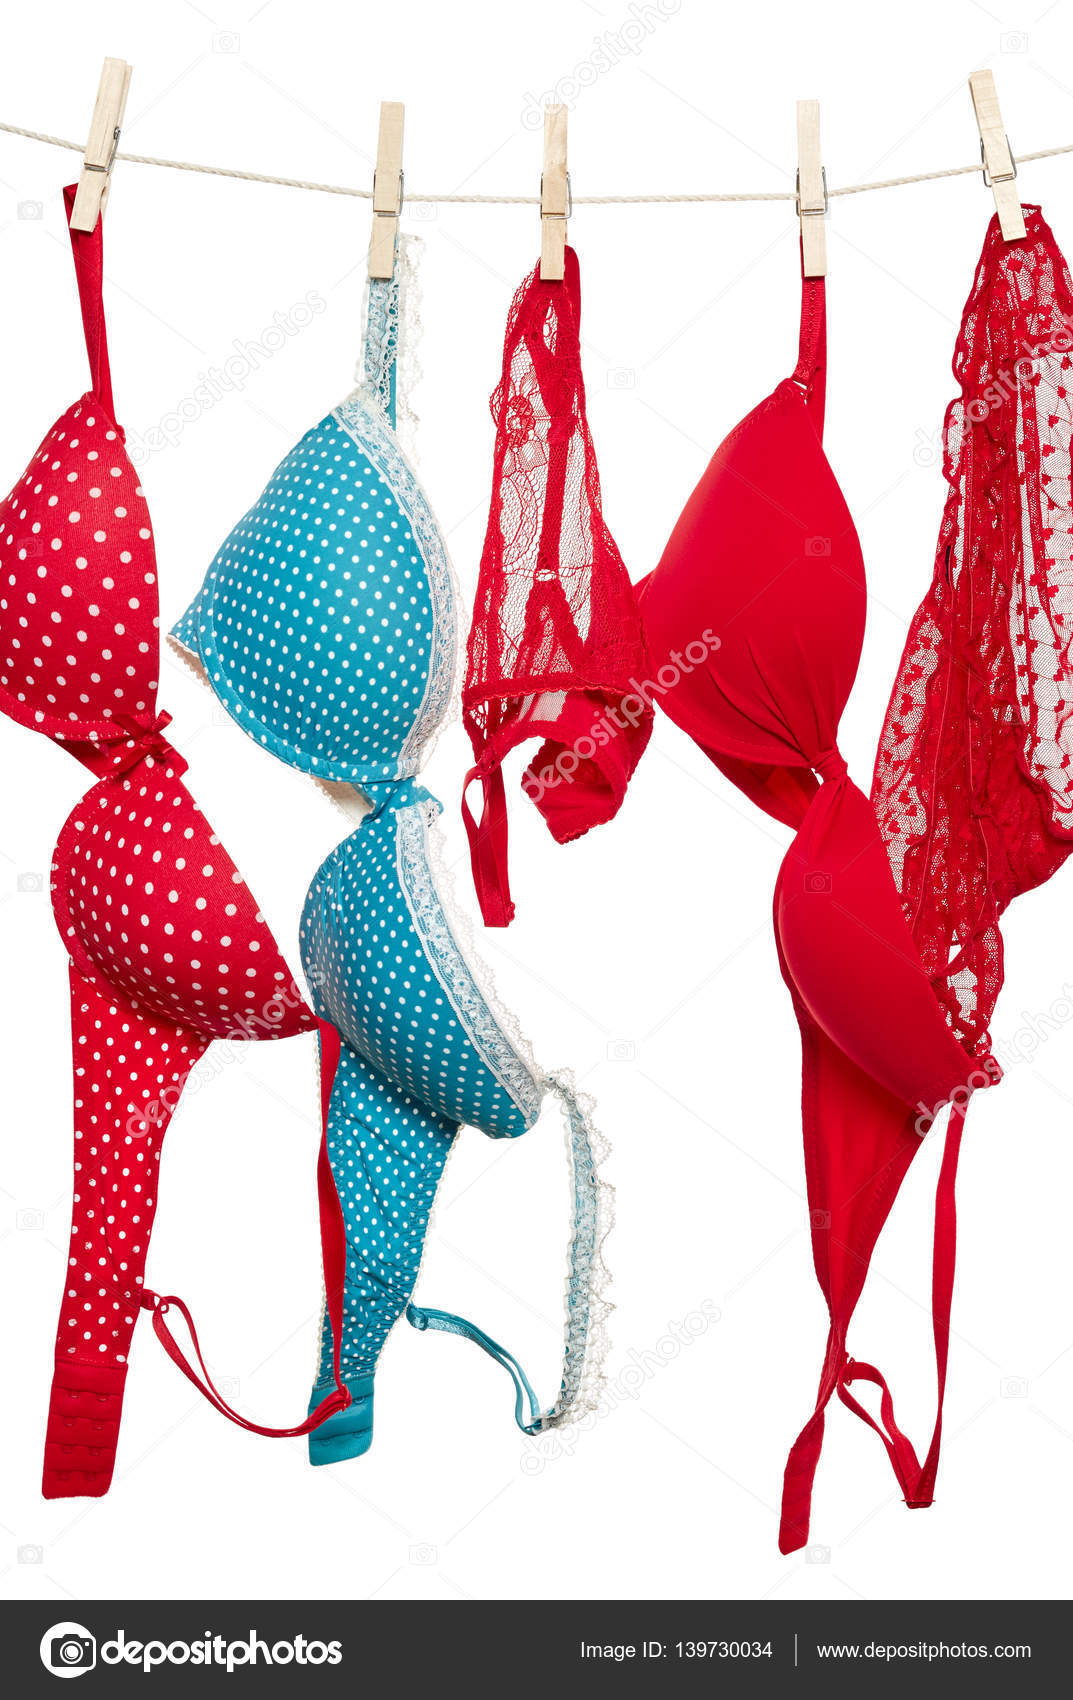 https://st3.depositphotos.com/1043285/13973/i/1600/depositphotos_139730034-stock-photo-female-panties-and-bra-on.jpg